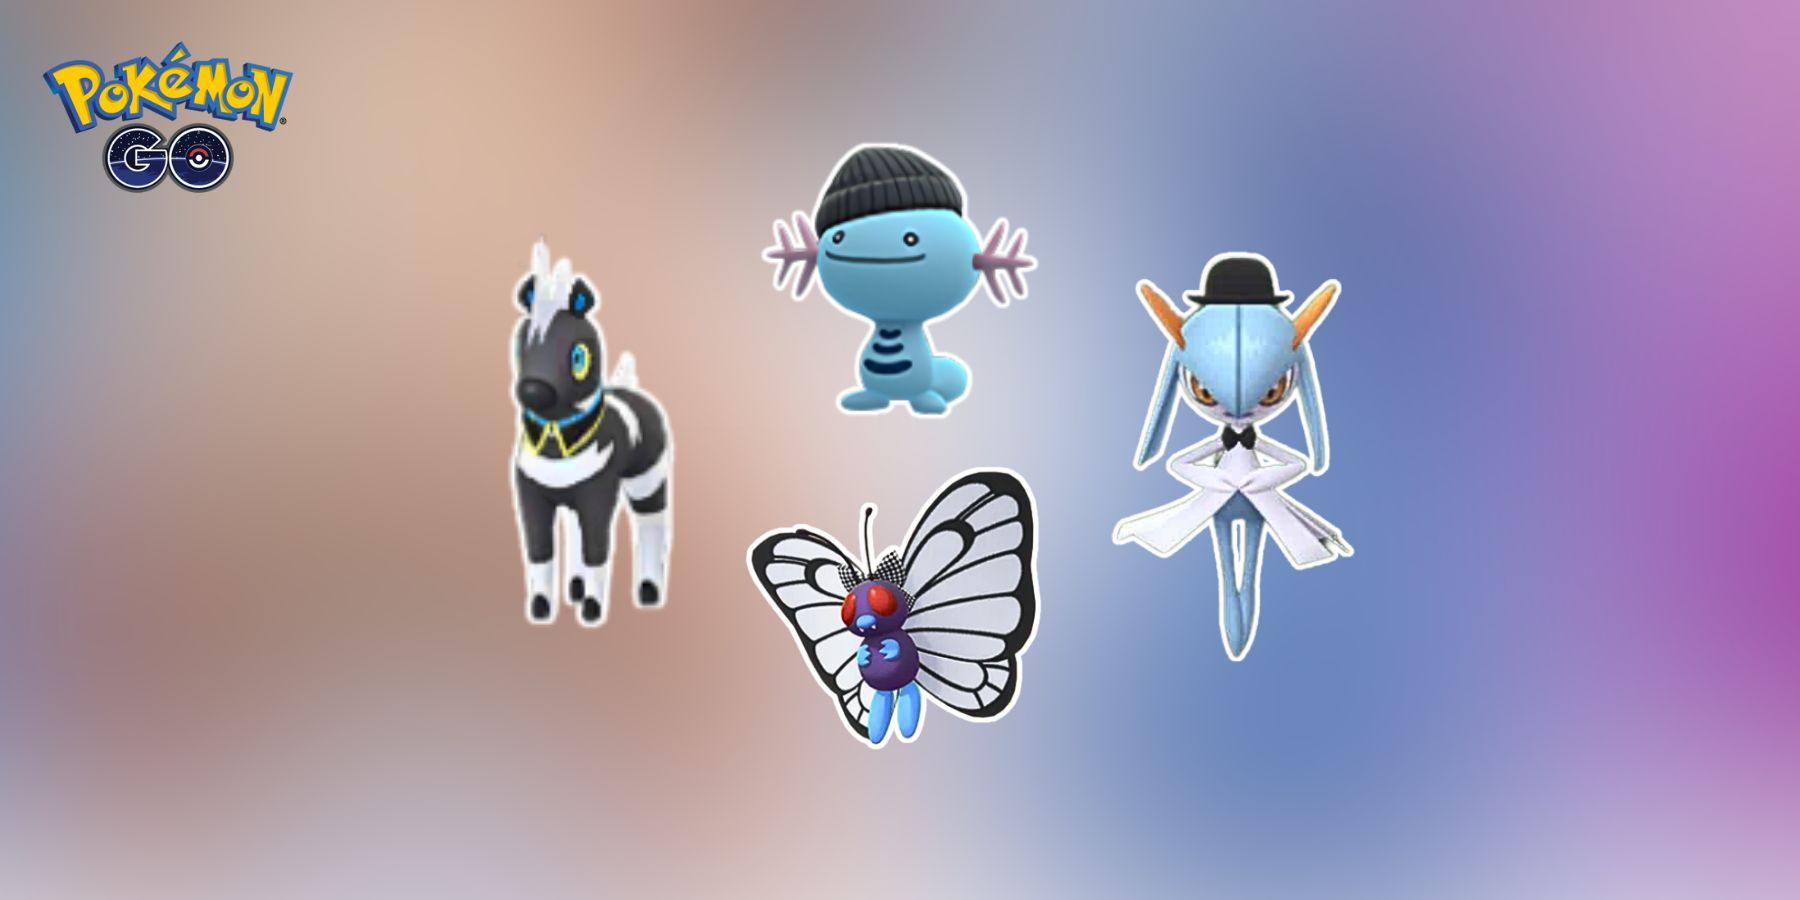 Pokémon Go Adventure Week 2019 guide: Field research, Shiny Pokémon, and  more - Polygon